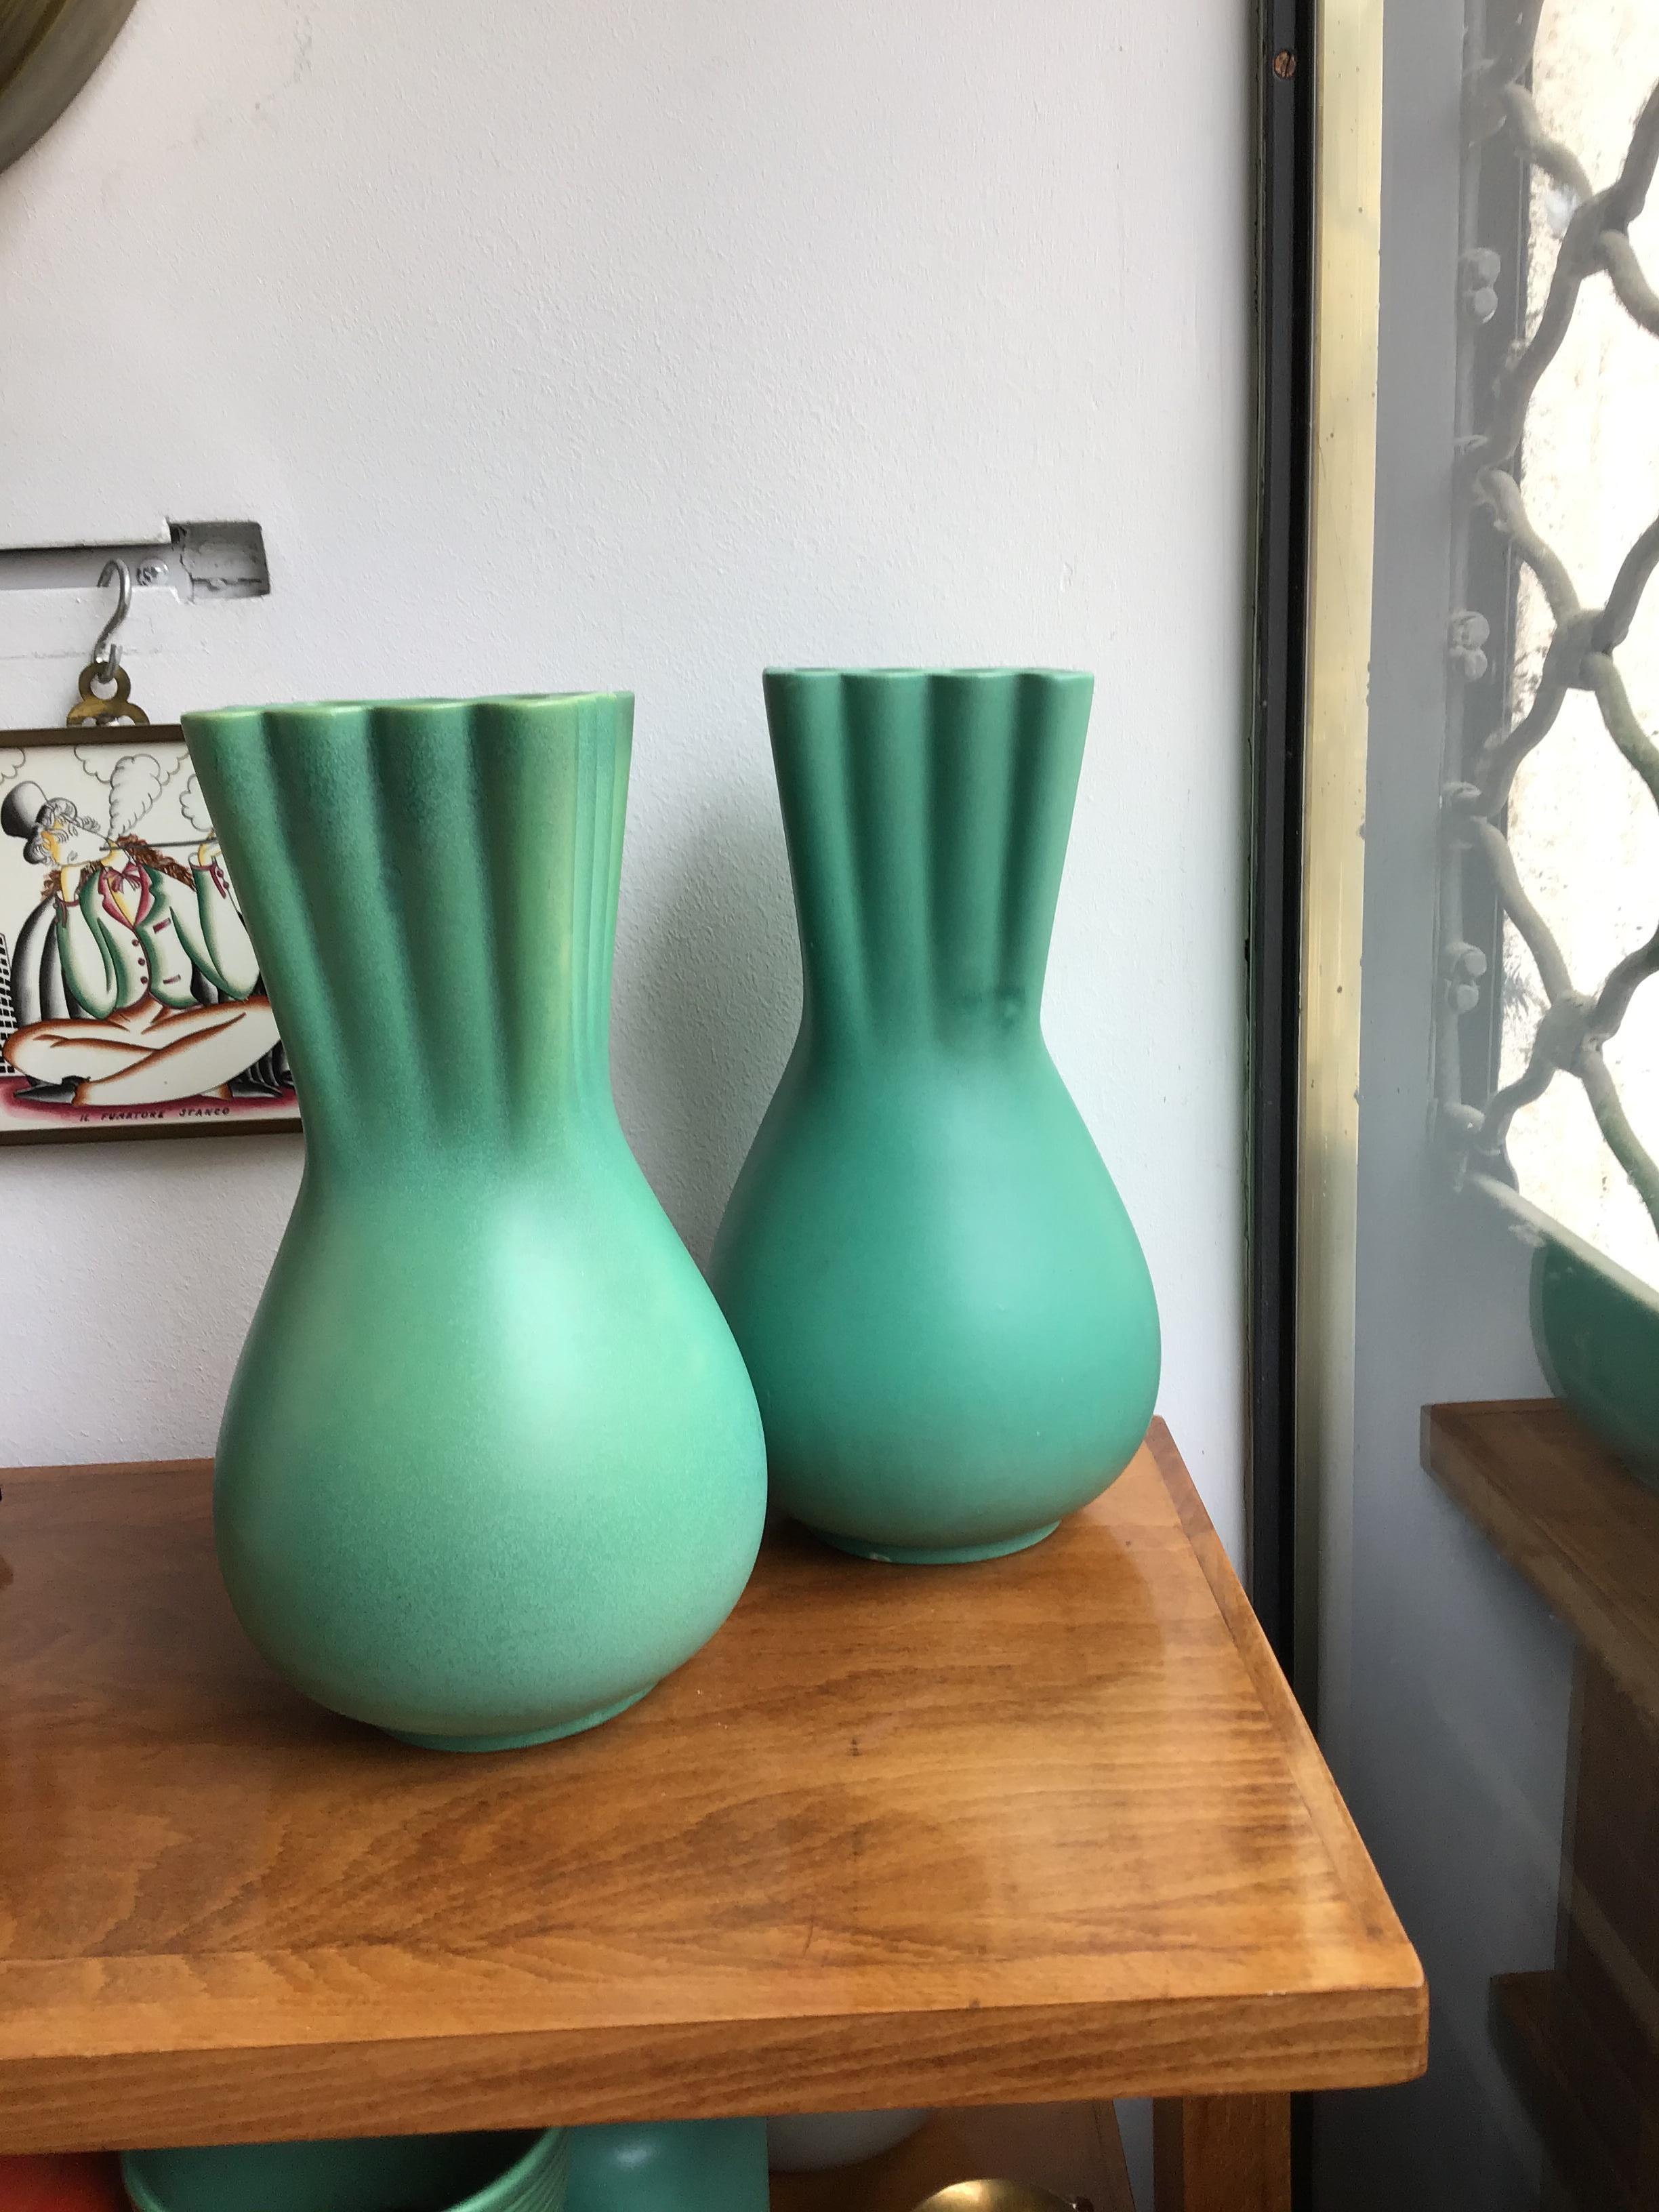 Richard Ginori Giovanni Gariboldi Green Vase Ceramic, 1950, Italy For Sale 10